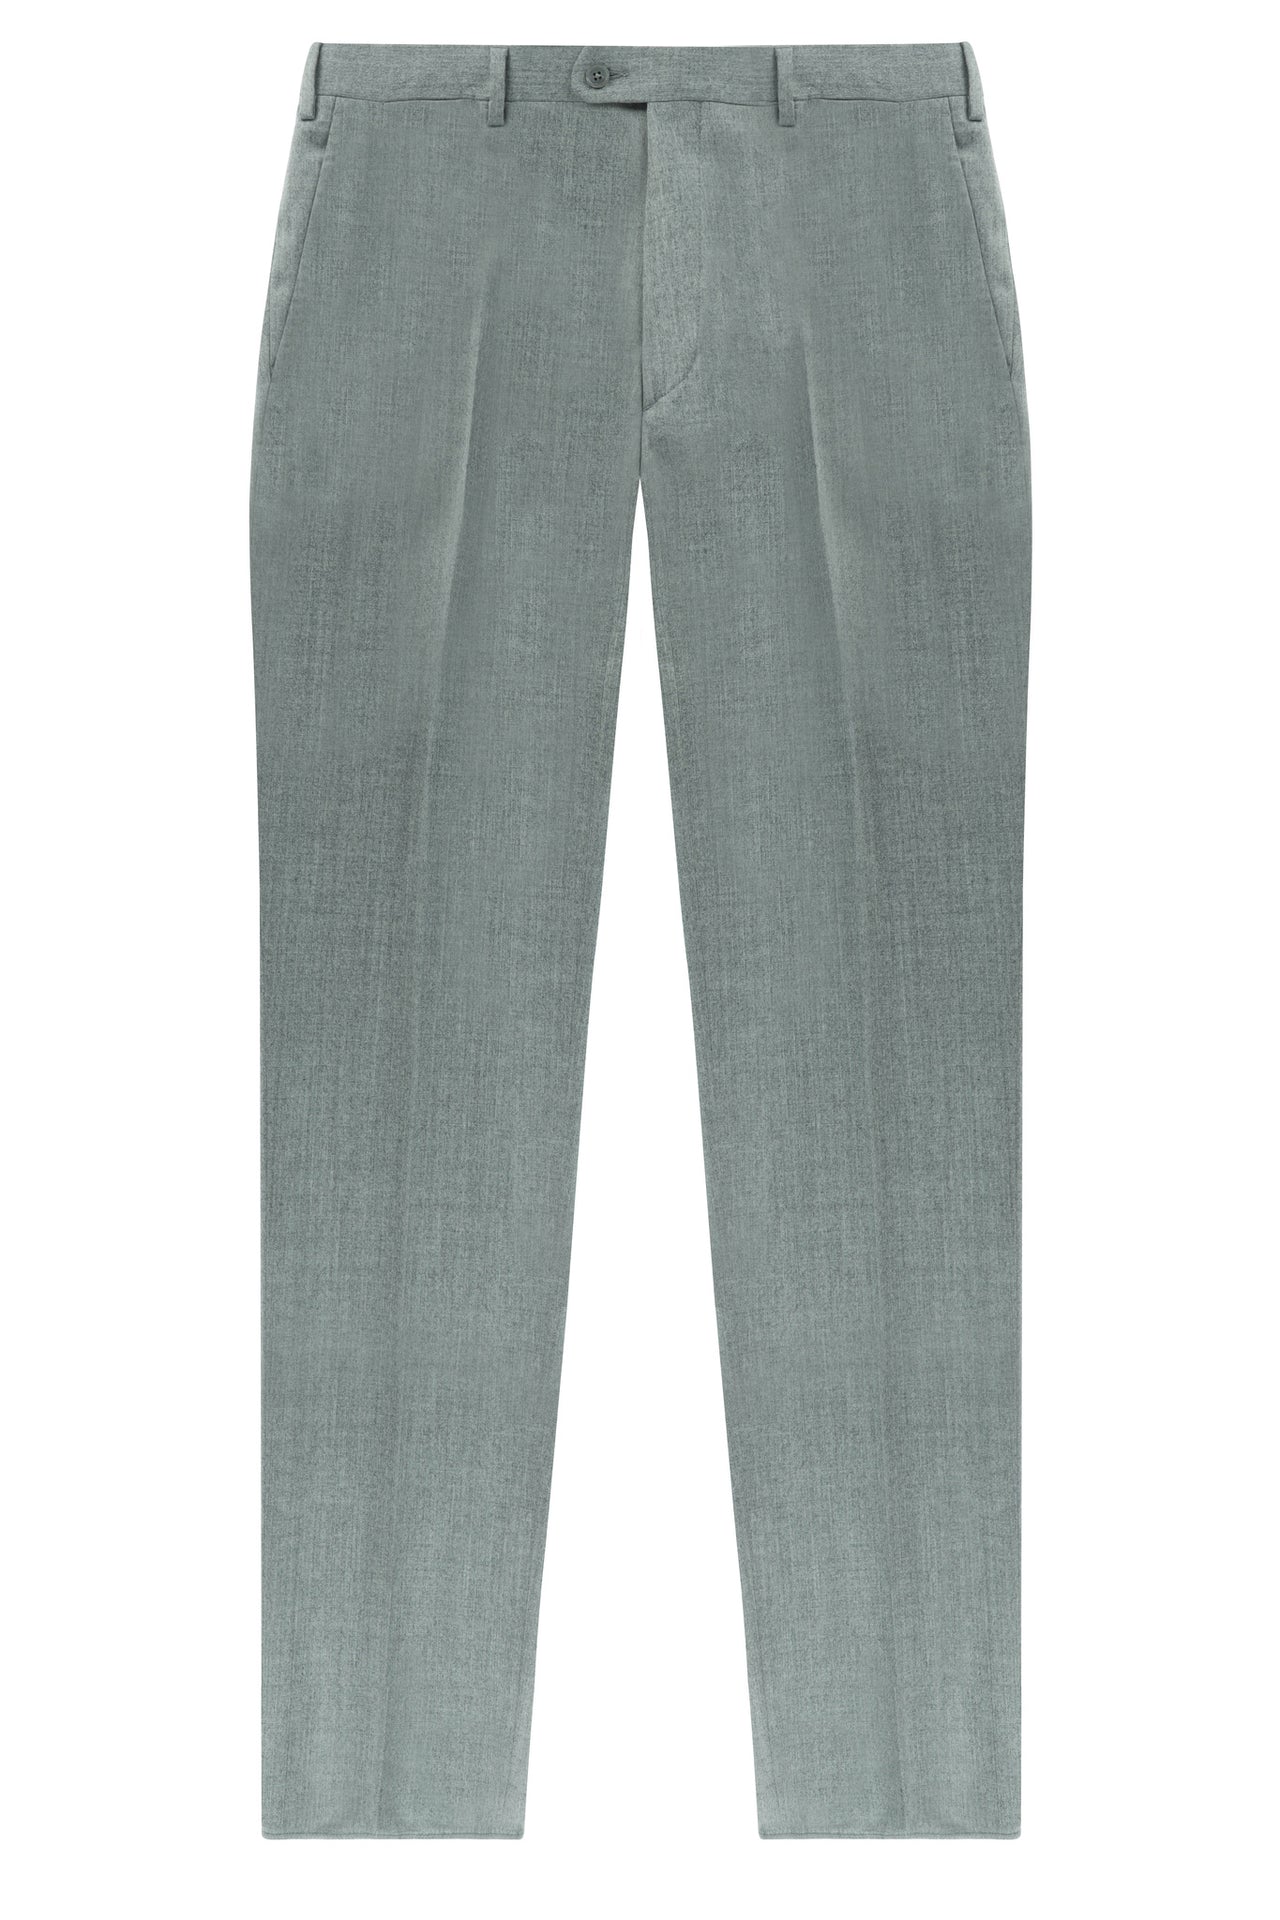 HENRY SARTORIAL Plain Trouser DOLPHIN GREY REG